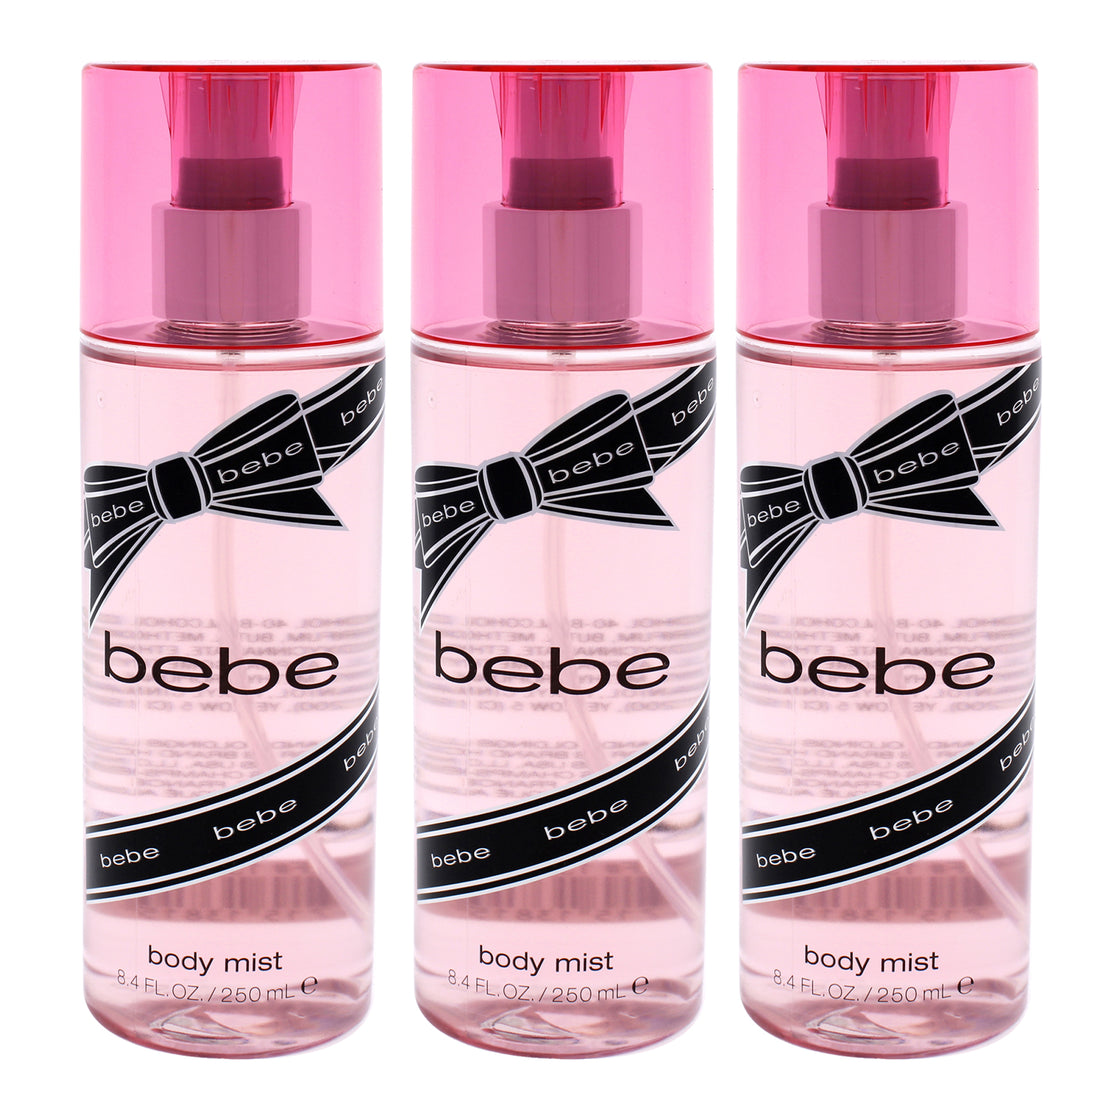 Bebe Silver by Bebe for Women - 8.4 oz Body Mist - Pack of 3